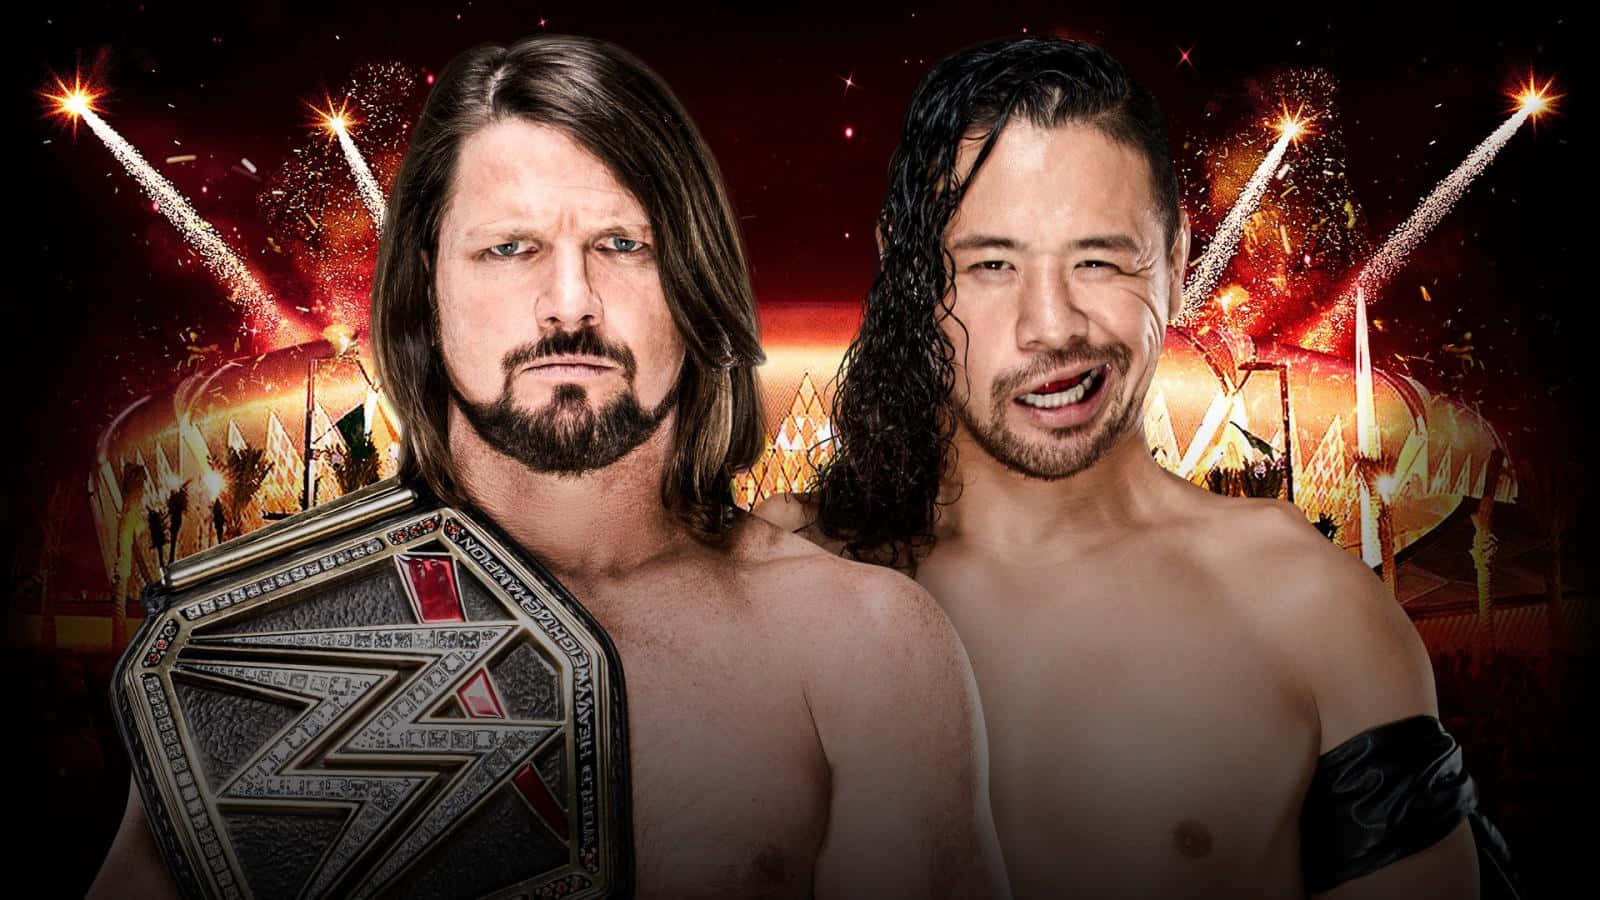 The Royal Rumble AJ Styles Vs Shinsuke Nakamura Wallpaper